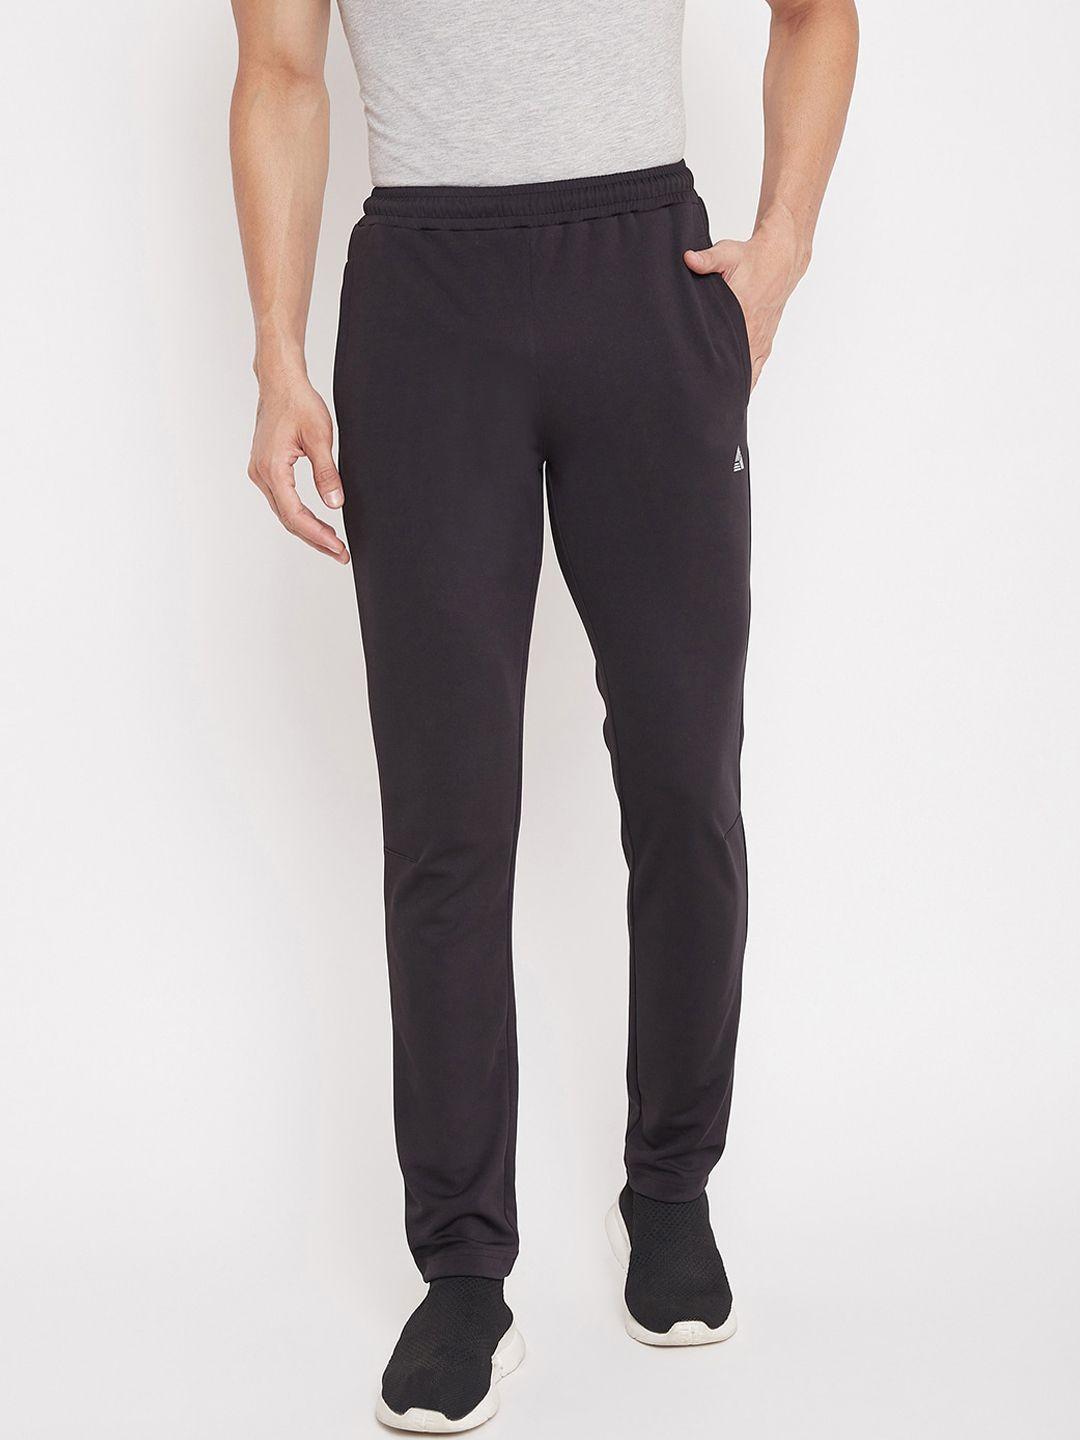 athlisis men black solid slim-fit track pants